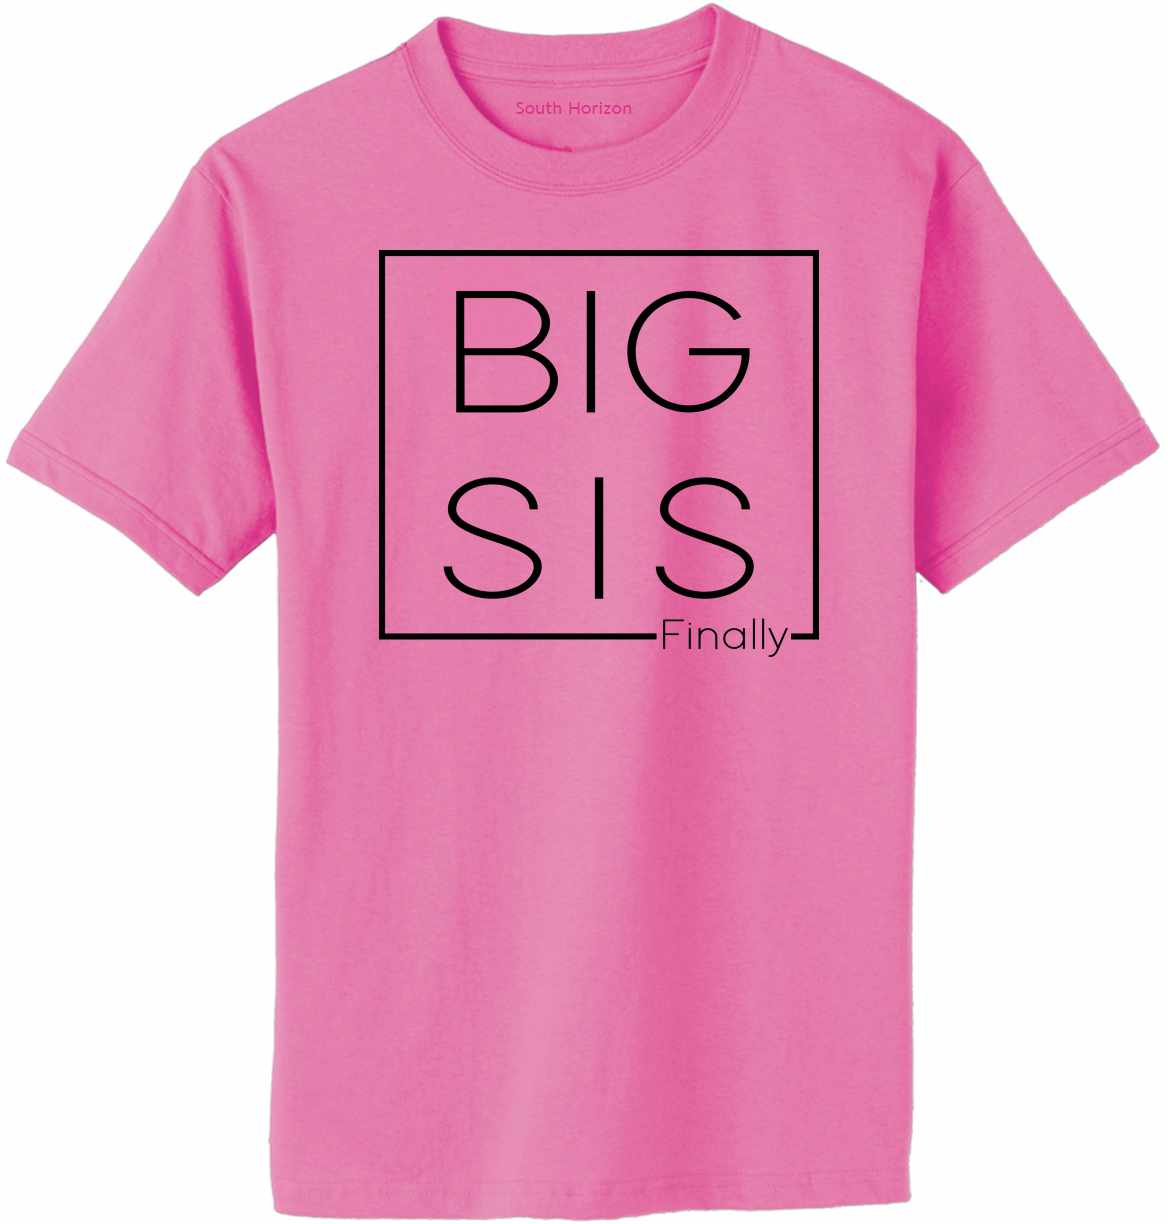 Big Sis Finally- Big Sister Boxed on Adult T-Shirt (#1313-1)